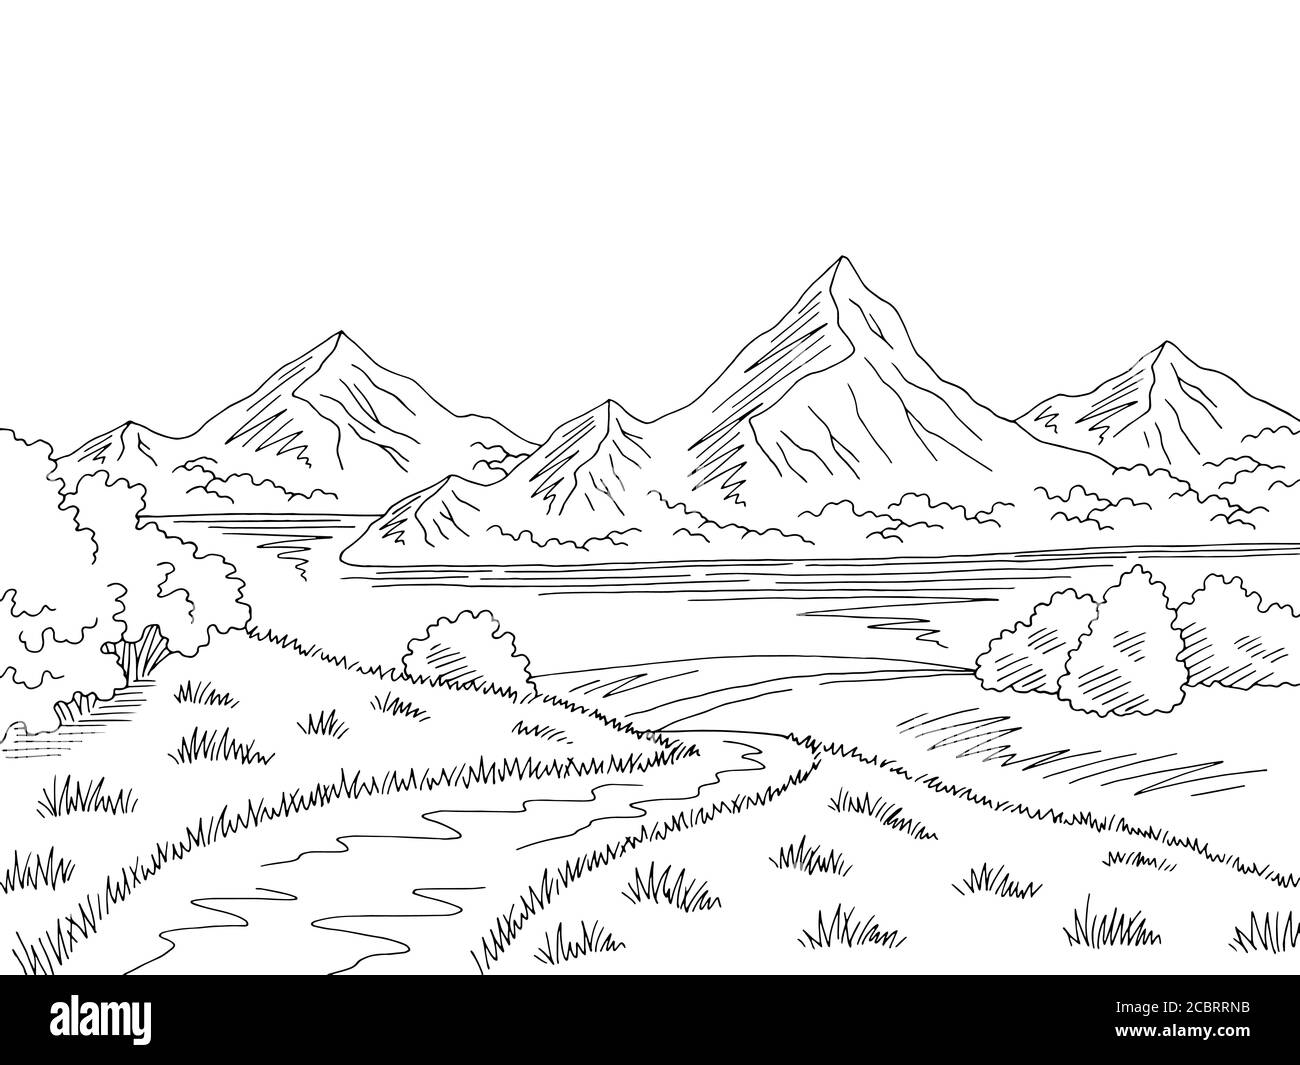 Mountain lake road graphic black white landscape sketch illustration vector Stock Vector